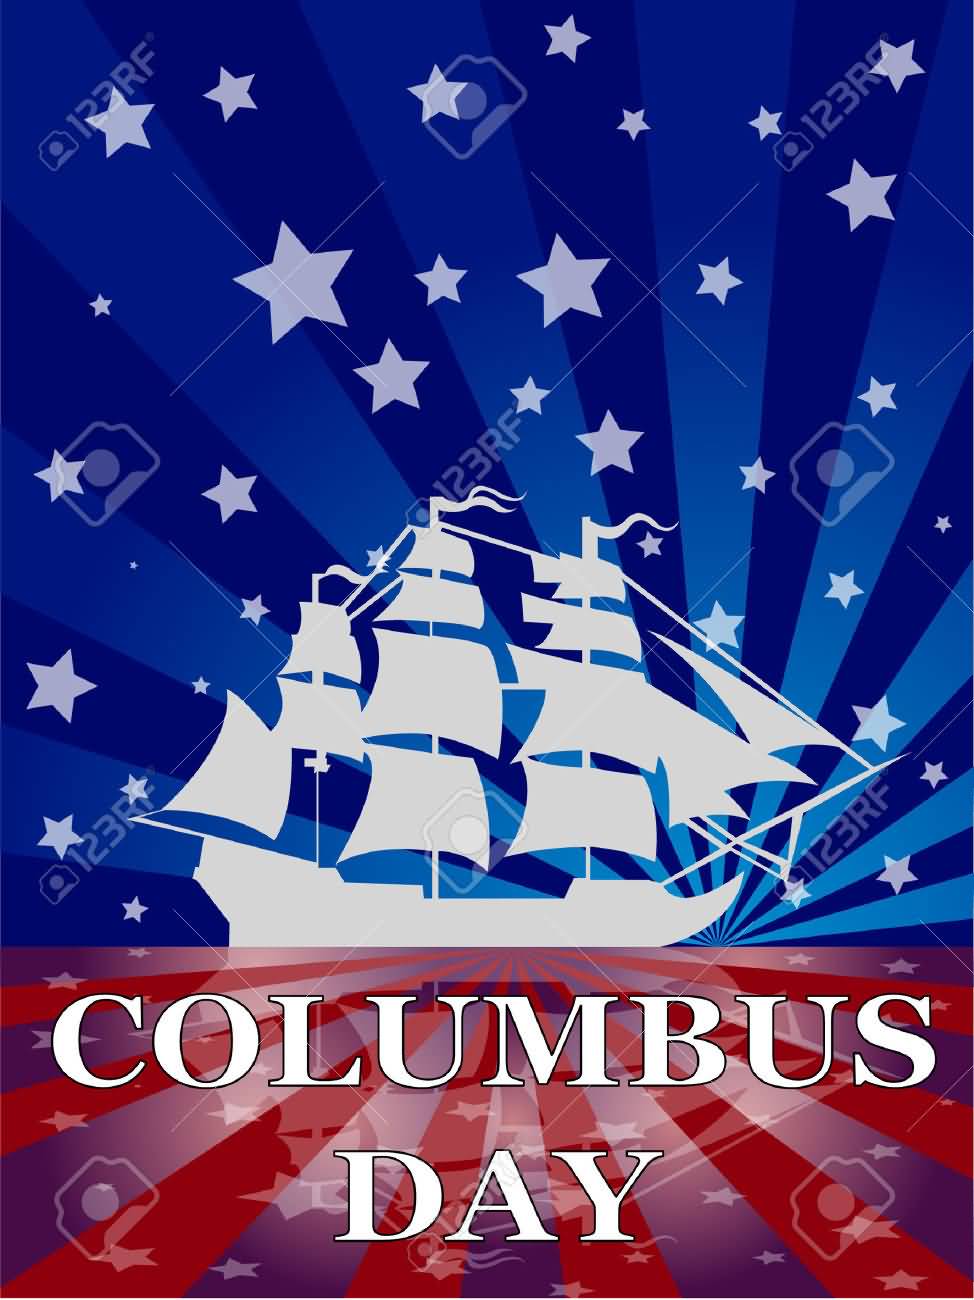 Columbus Day 2016 Greeting Card